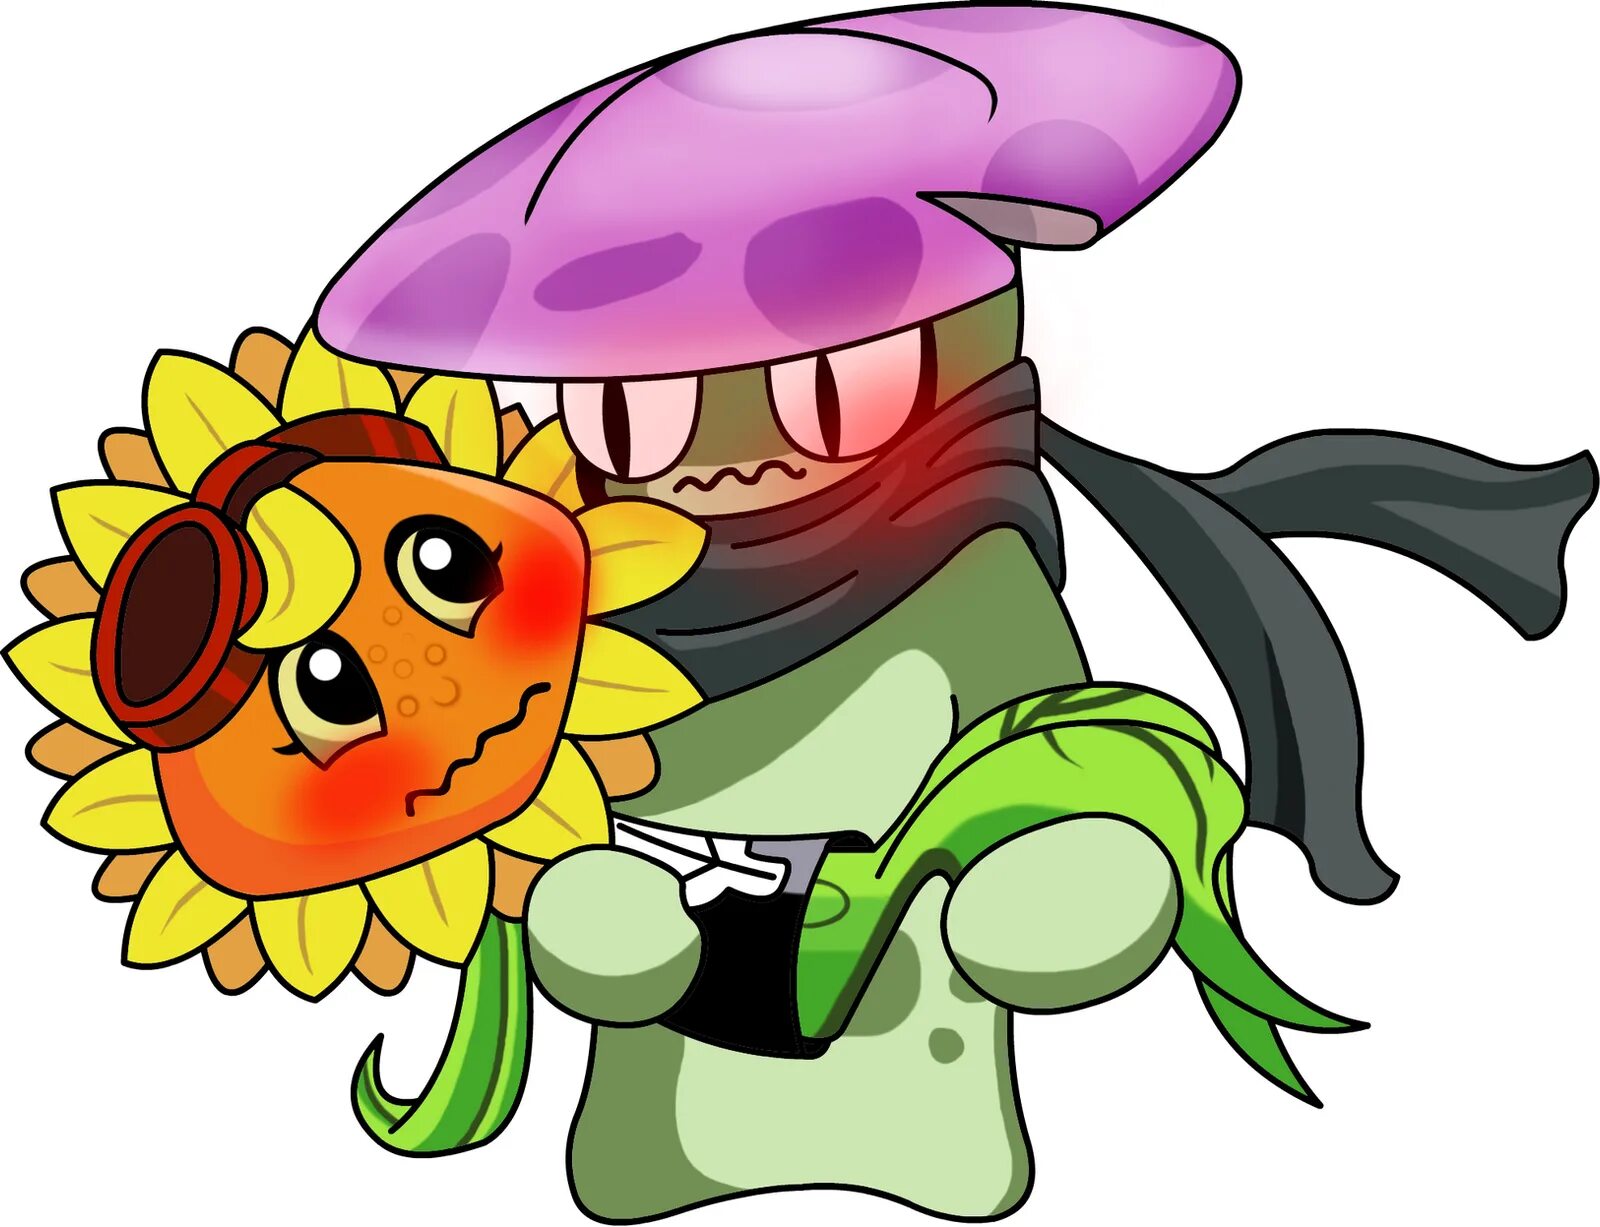 Pvz 2 wiki. PVZ Heroes Sunflower. PVZ r34. Растения против зомби Цитрон. PVZ Solar Flare r34.